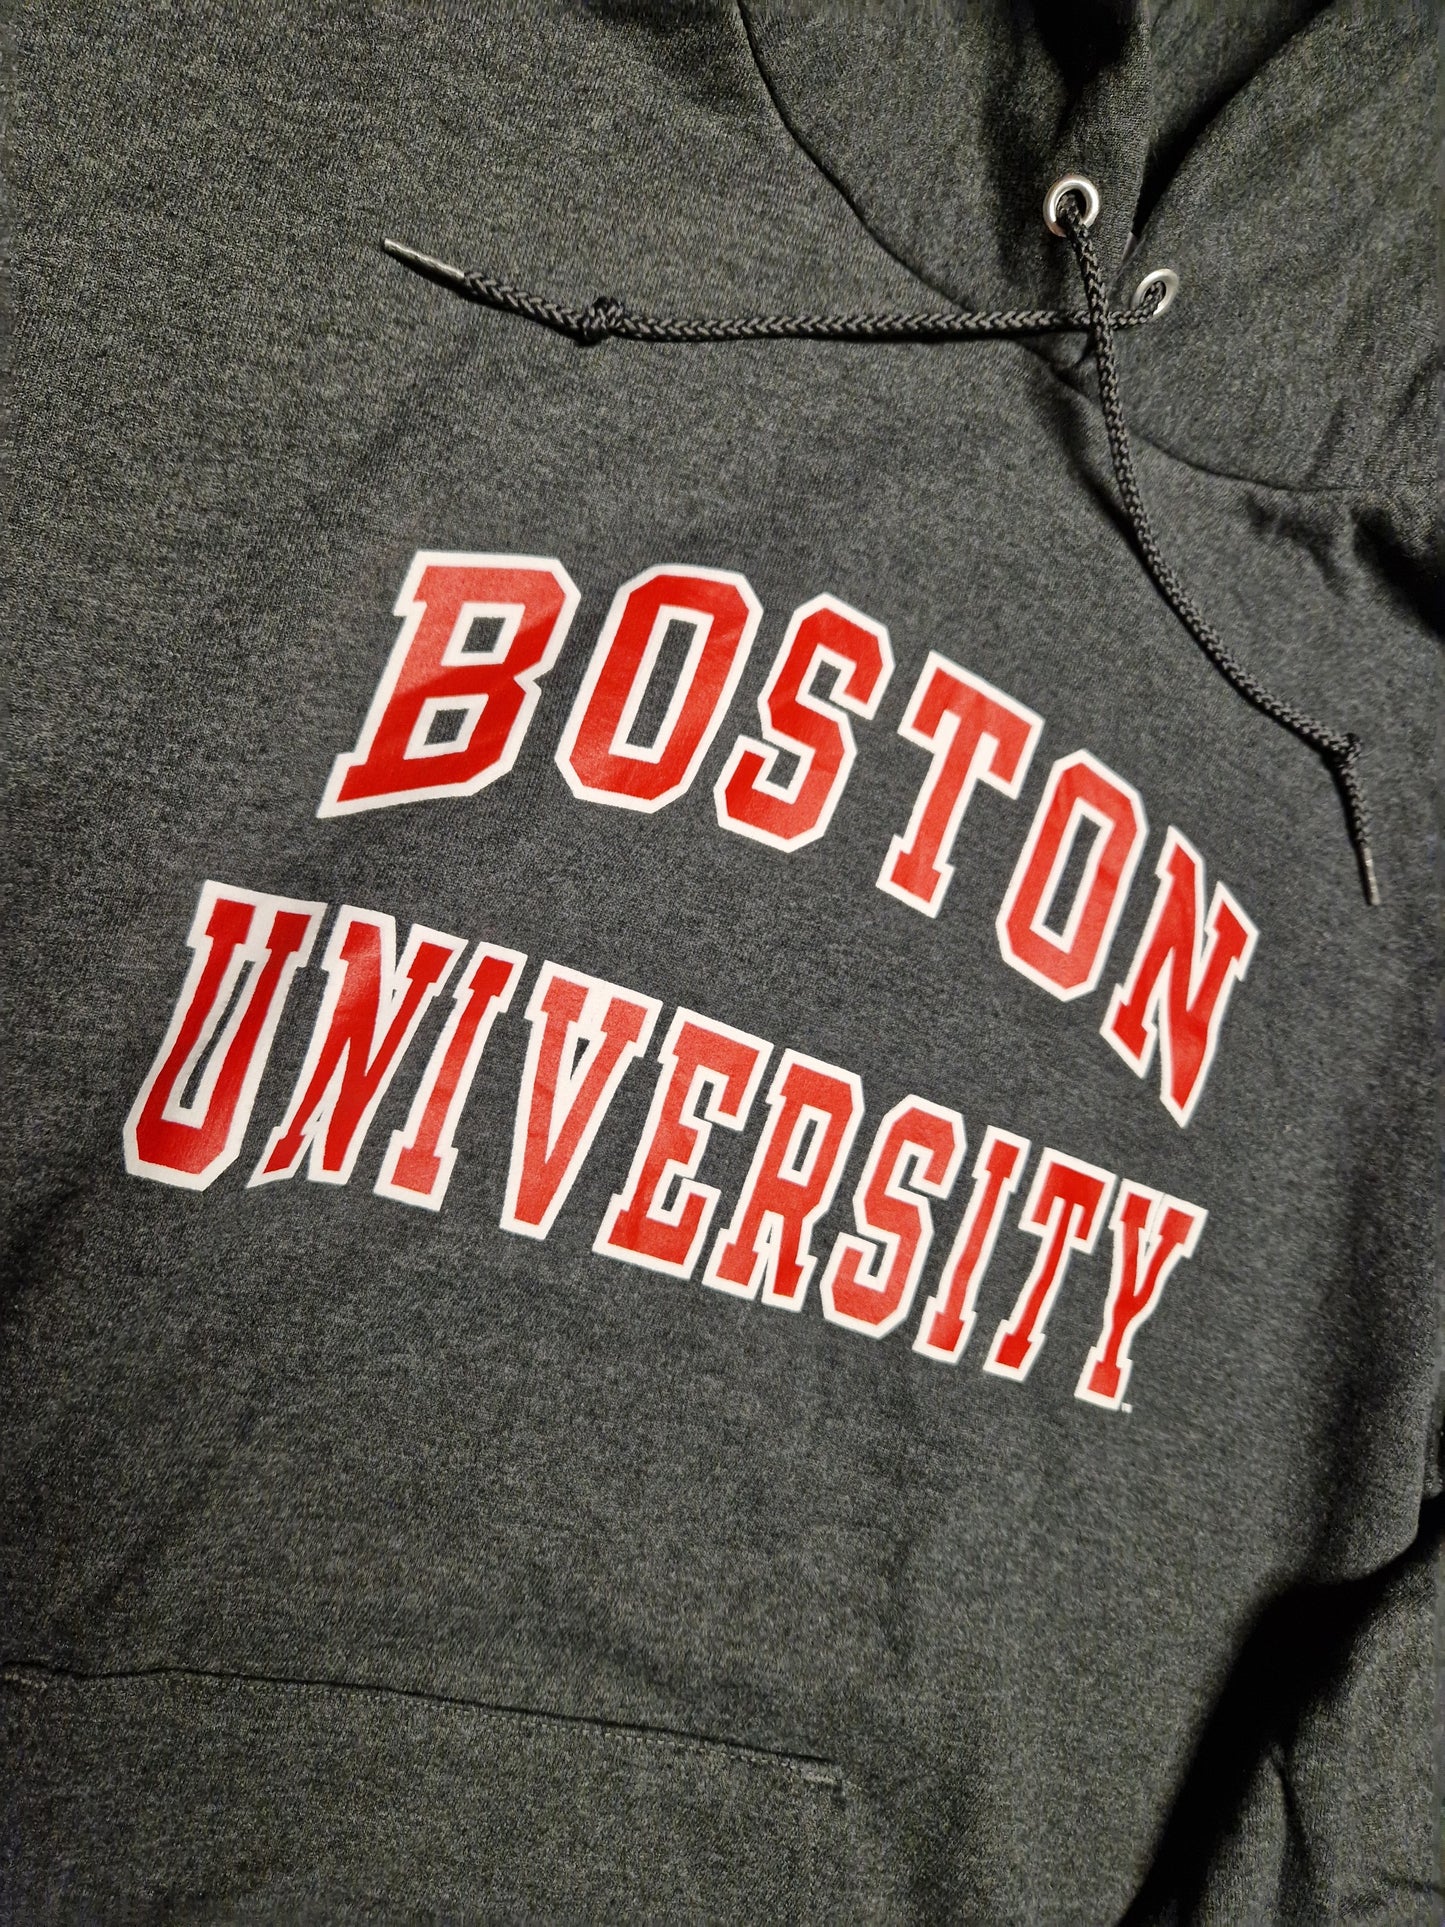 Boston University Hoodie Sweater Size Medium